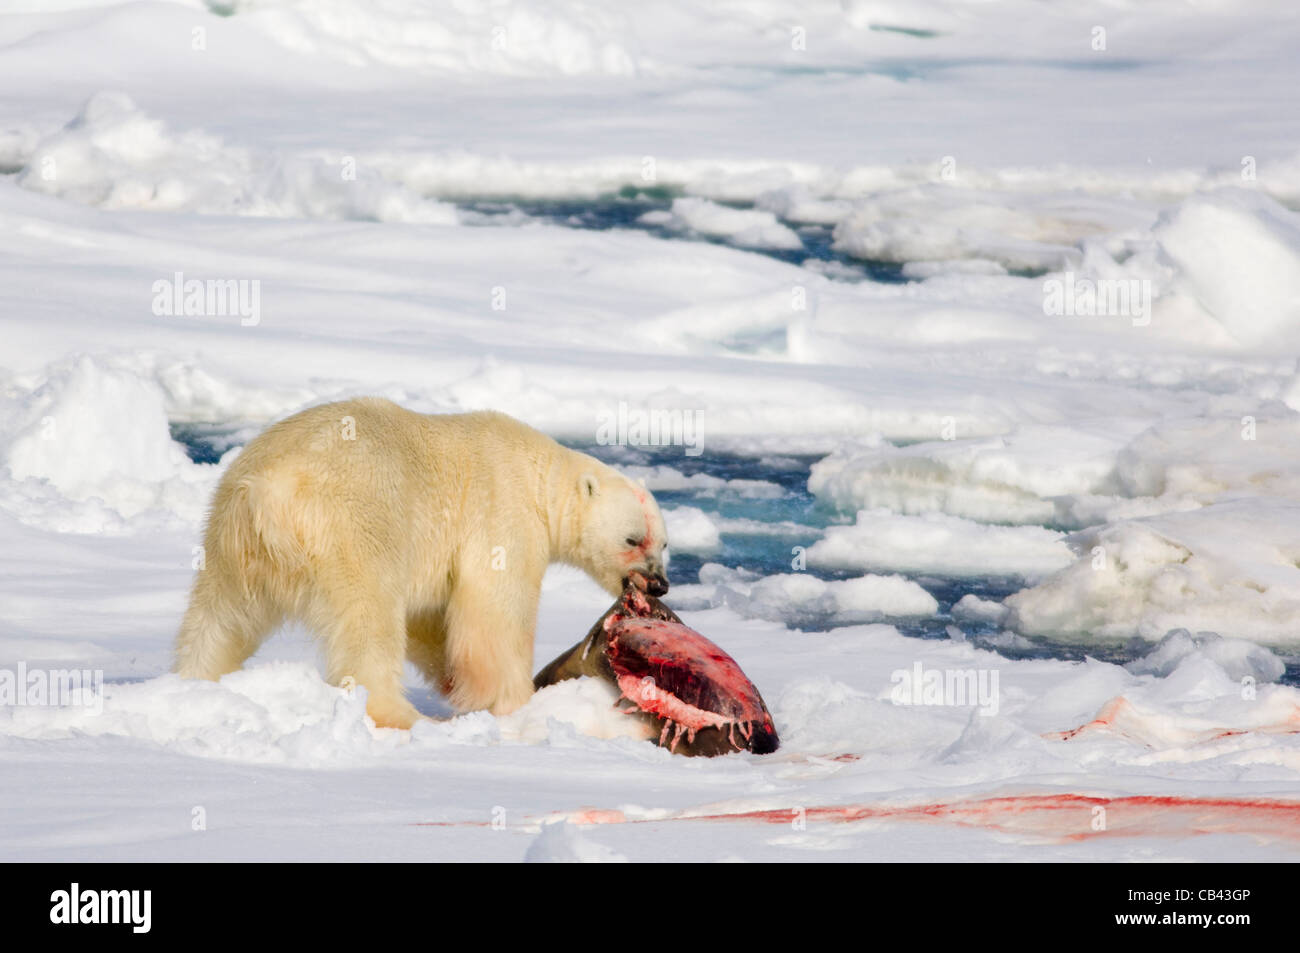 Male Polar Bear (Ursus maritimus), eating a freshly killed Bearded Seal (Erignathus barbatus)  on floating pack ice, Storfjorden, between Spitsbergen and Edgeøya, Svalbard Archipelago, Norway Stock Photo